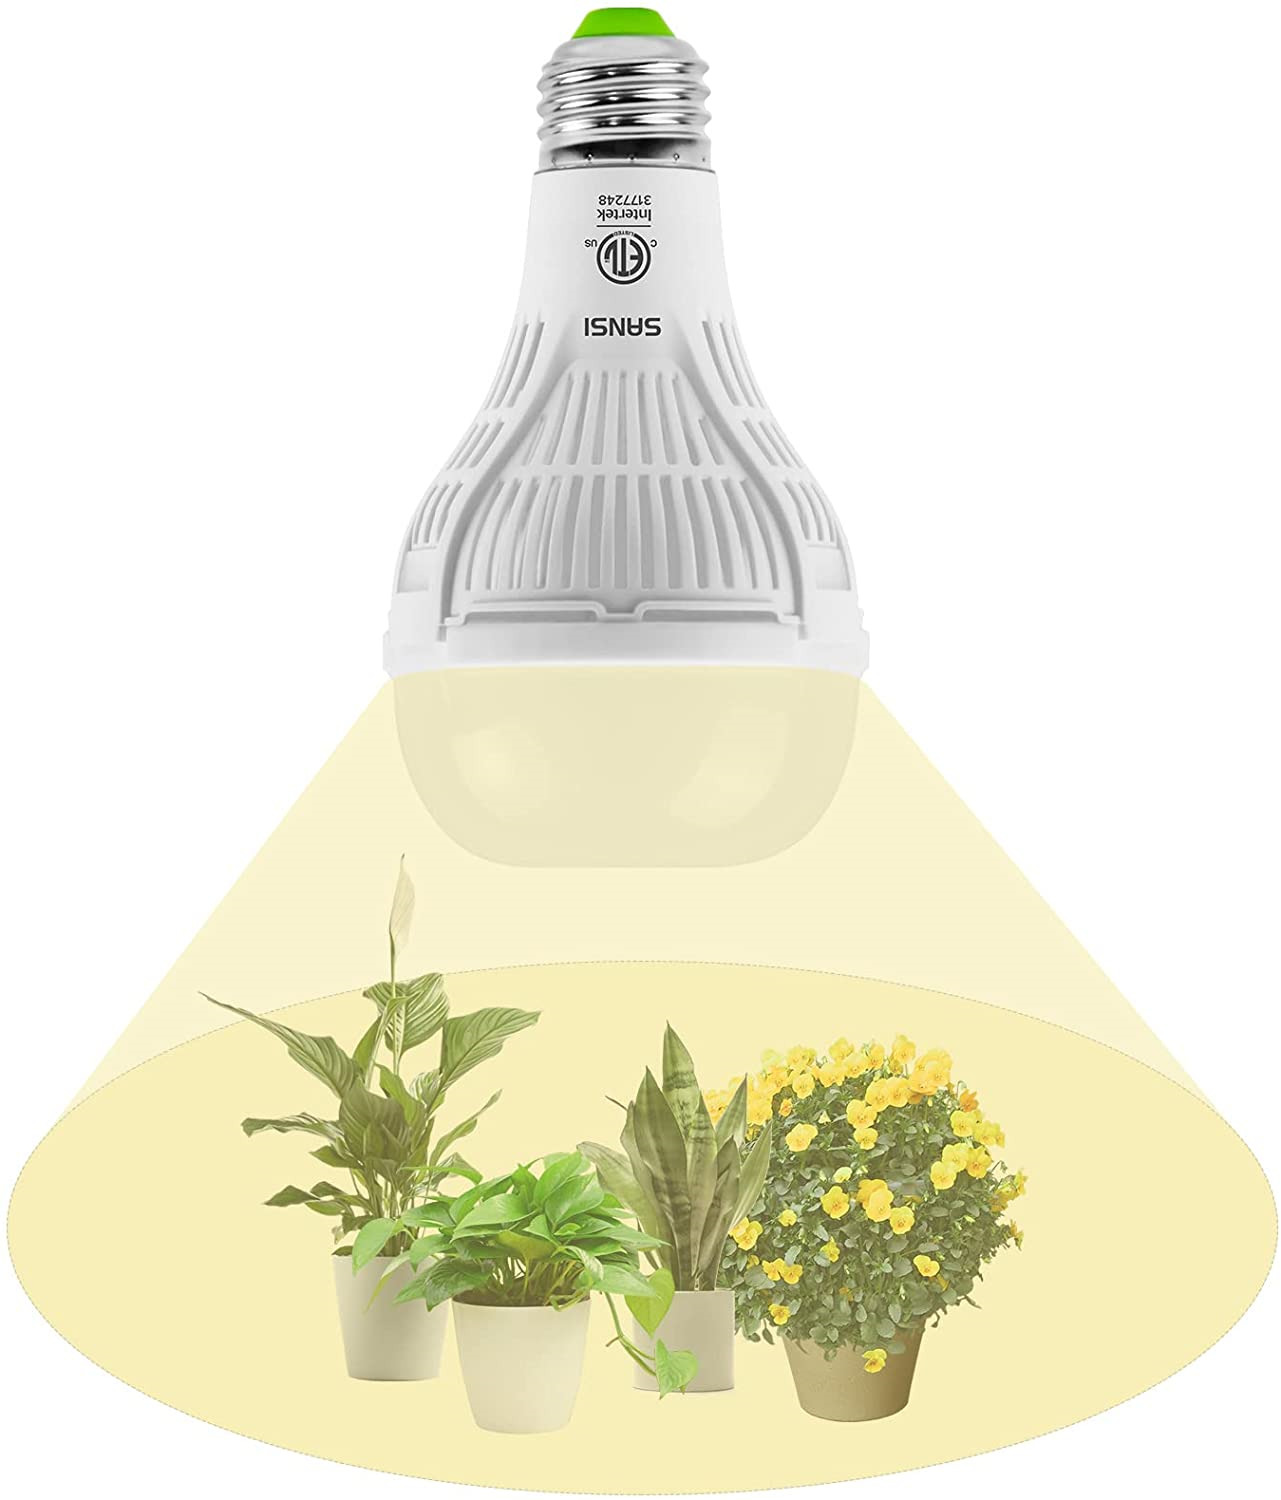 SANSI 15W(200W Equiv) LED Plants Grow Light Bulb Full Spectrum Indoor Grow Lamp